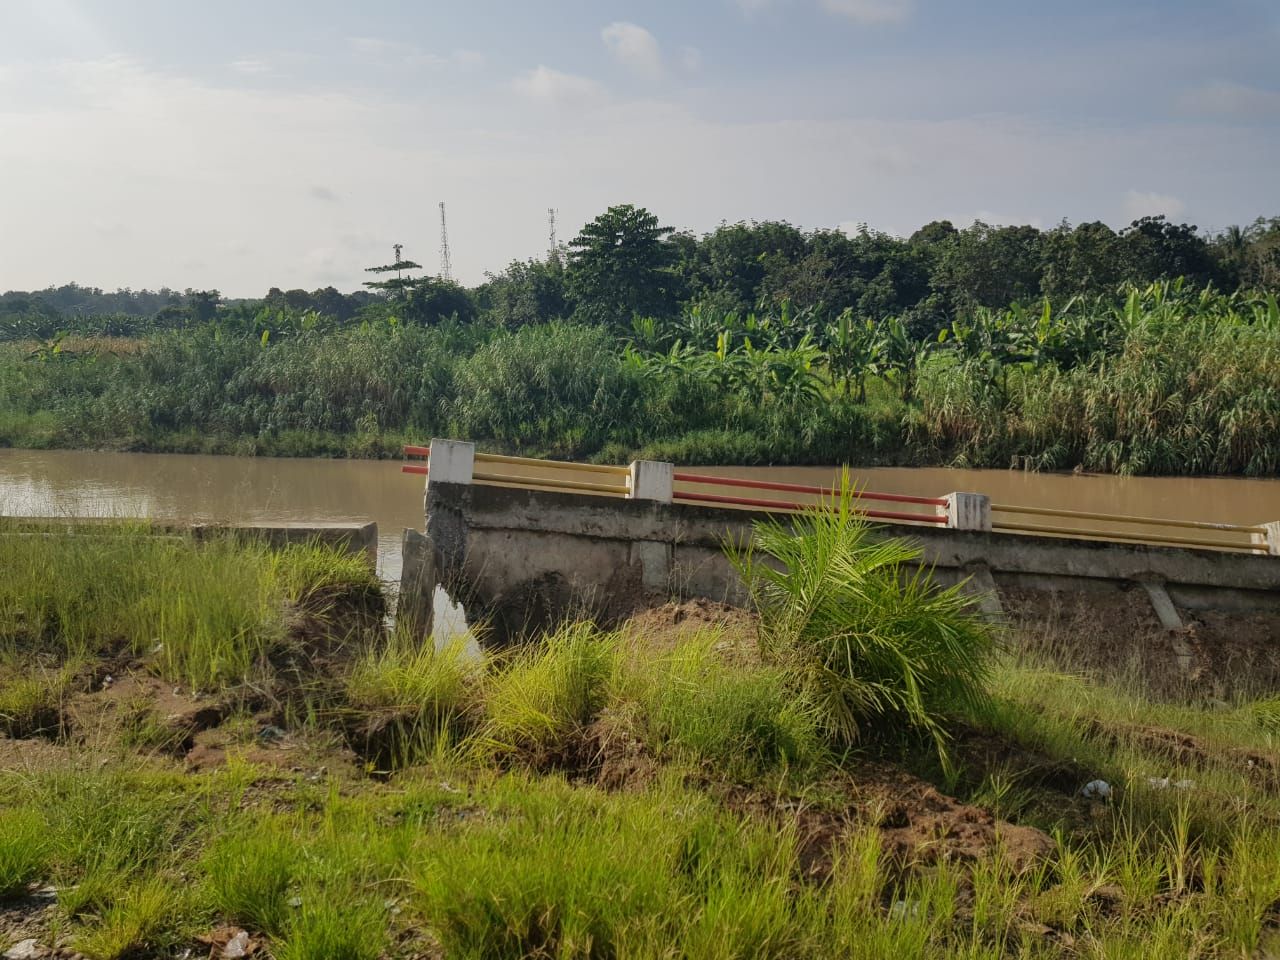 Penahan air Sungai Enim yang terletak di Jalan Lingkar Jembatan Enim 3, Desa Karang Raja, Kecamatan Muara Enim, terlihat roboh, Rabu, 3 Maret 2021.